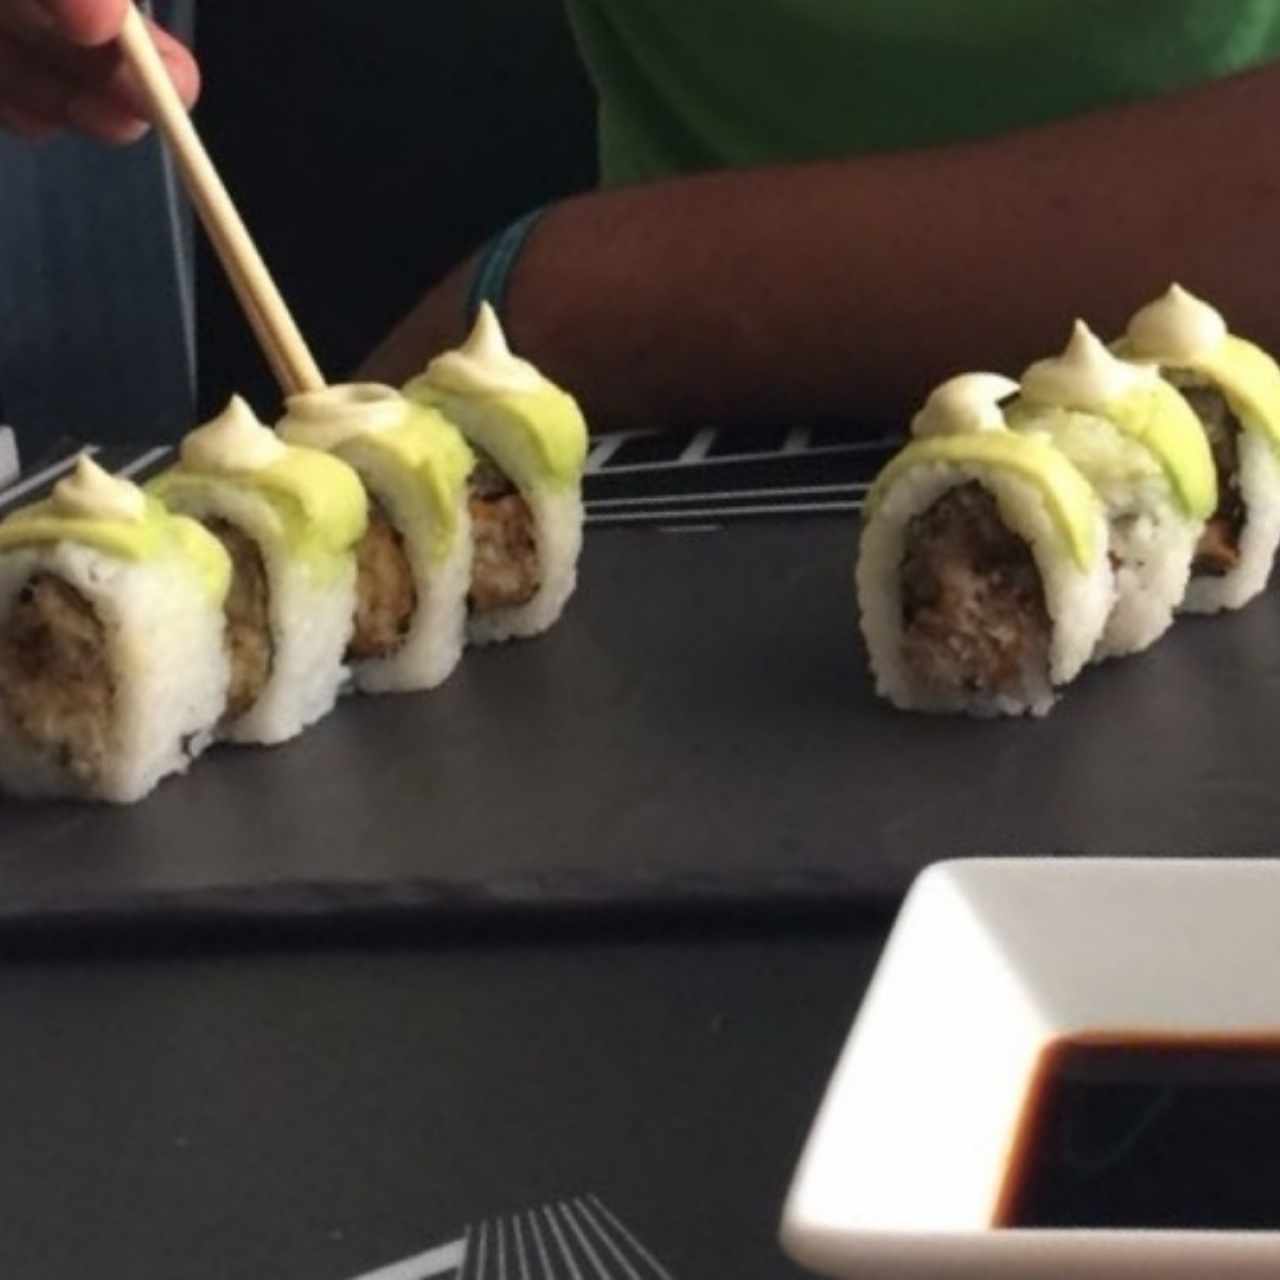 Sushi Bar - Sexy roll